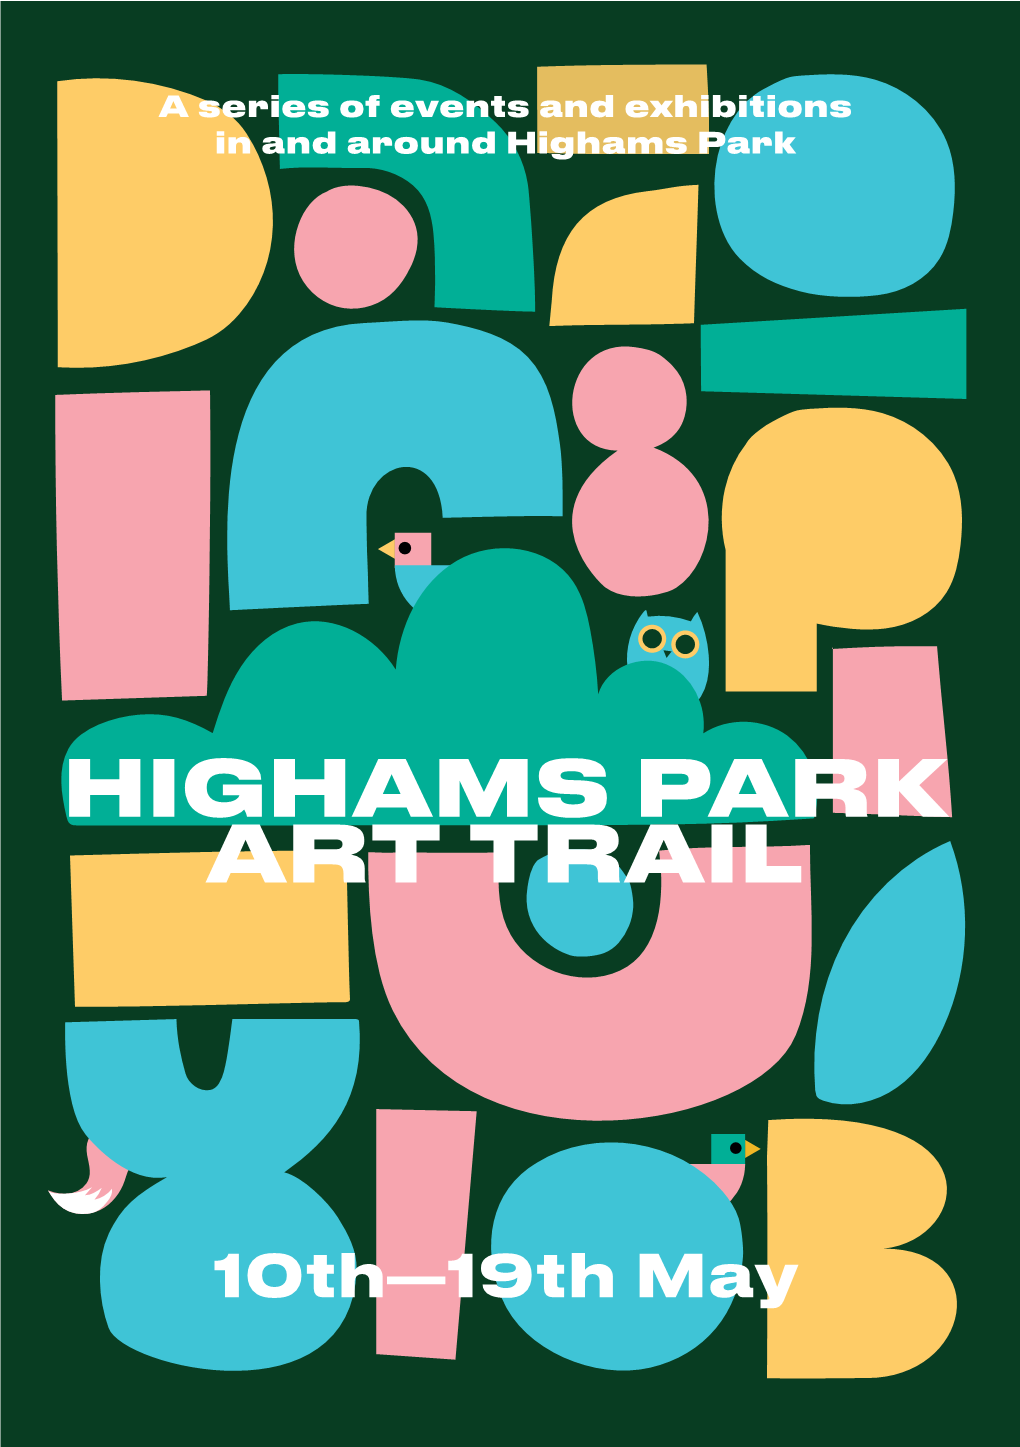 Highams Park Art Trail